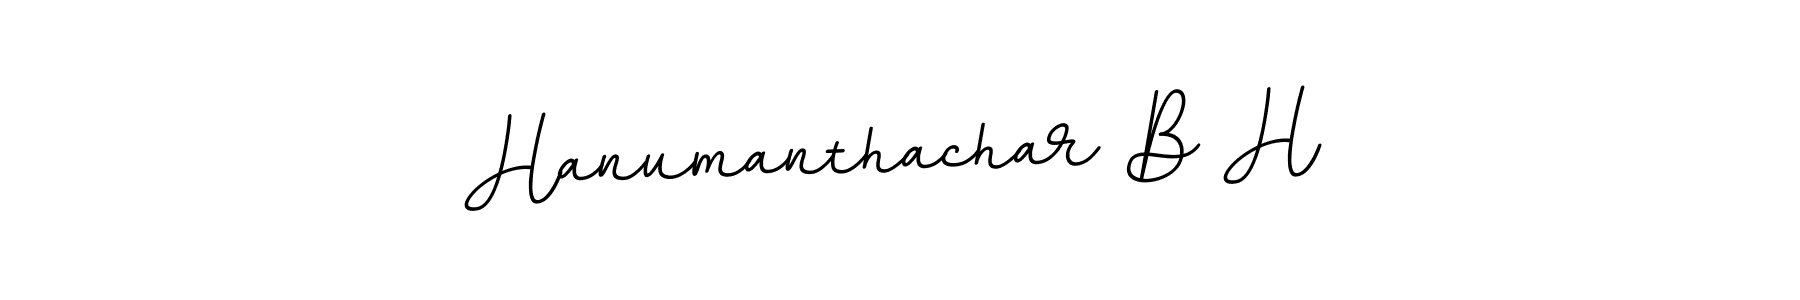 How to Draw Hanumanthachar B H signature style? BallpointsItalic-DORy9 is a latest design signature styles for name Hanumanthachar B H. Hanumanthachar B H signature style 11 images and pictures png